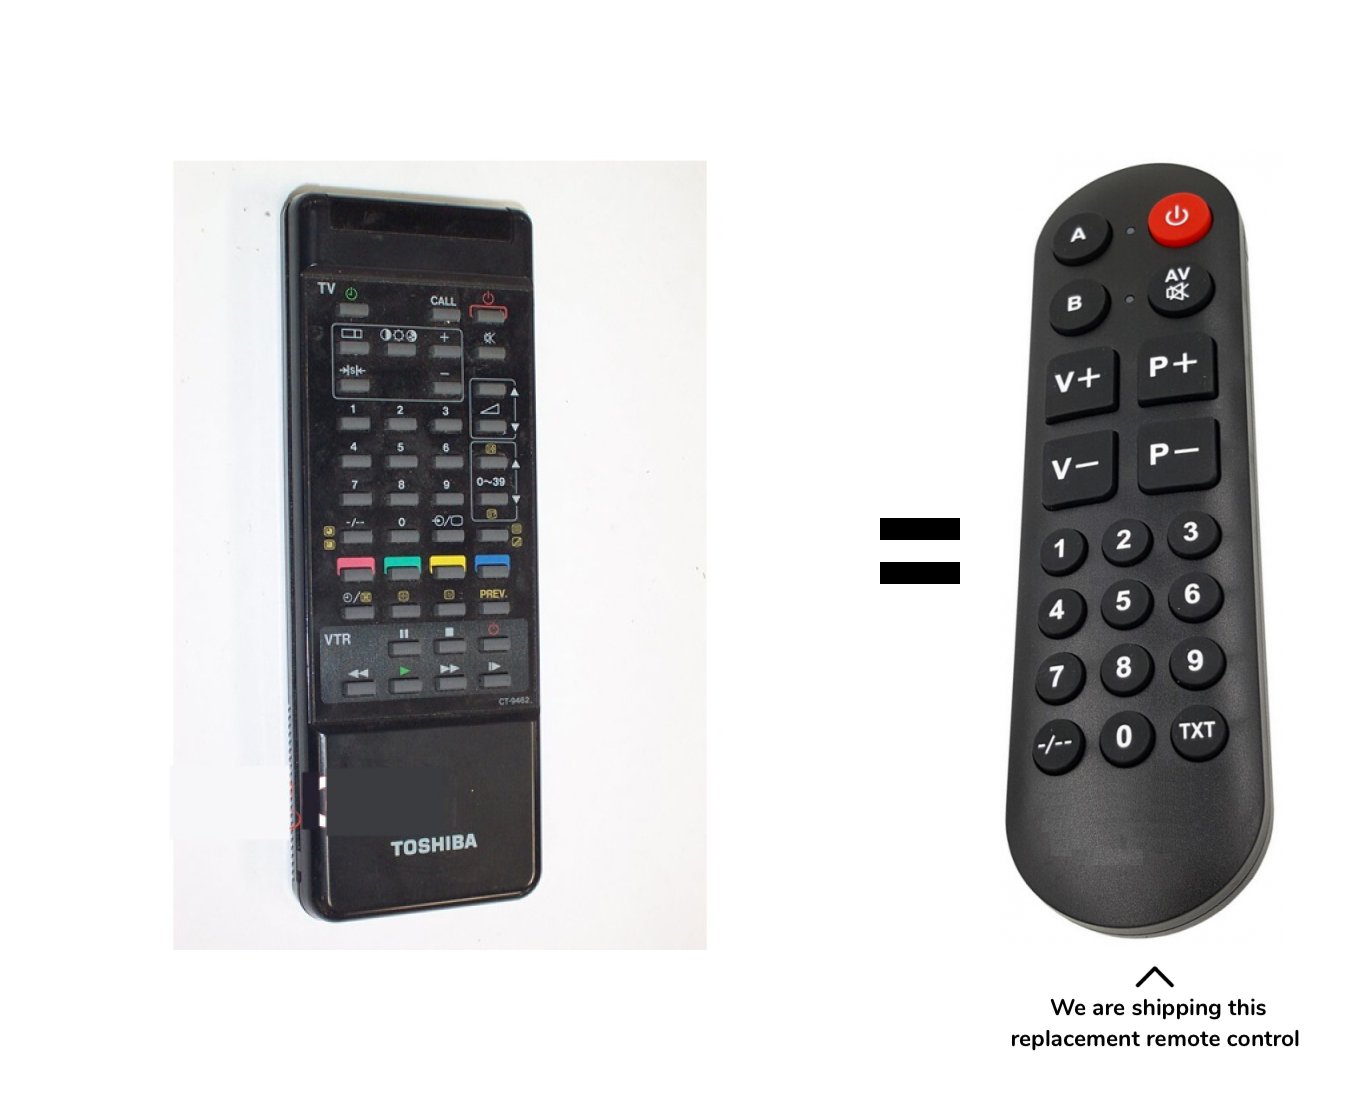 Toshiba CT-9526 remote control for seniors